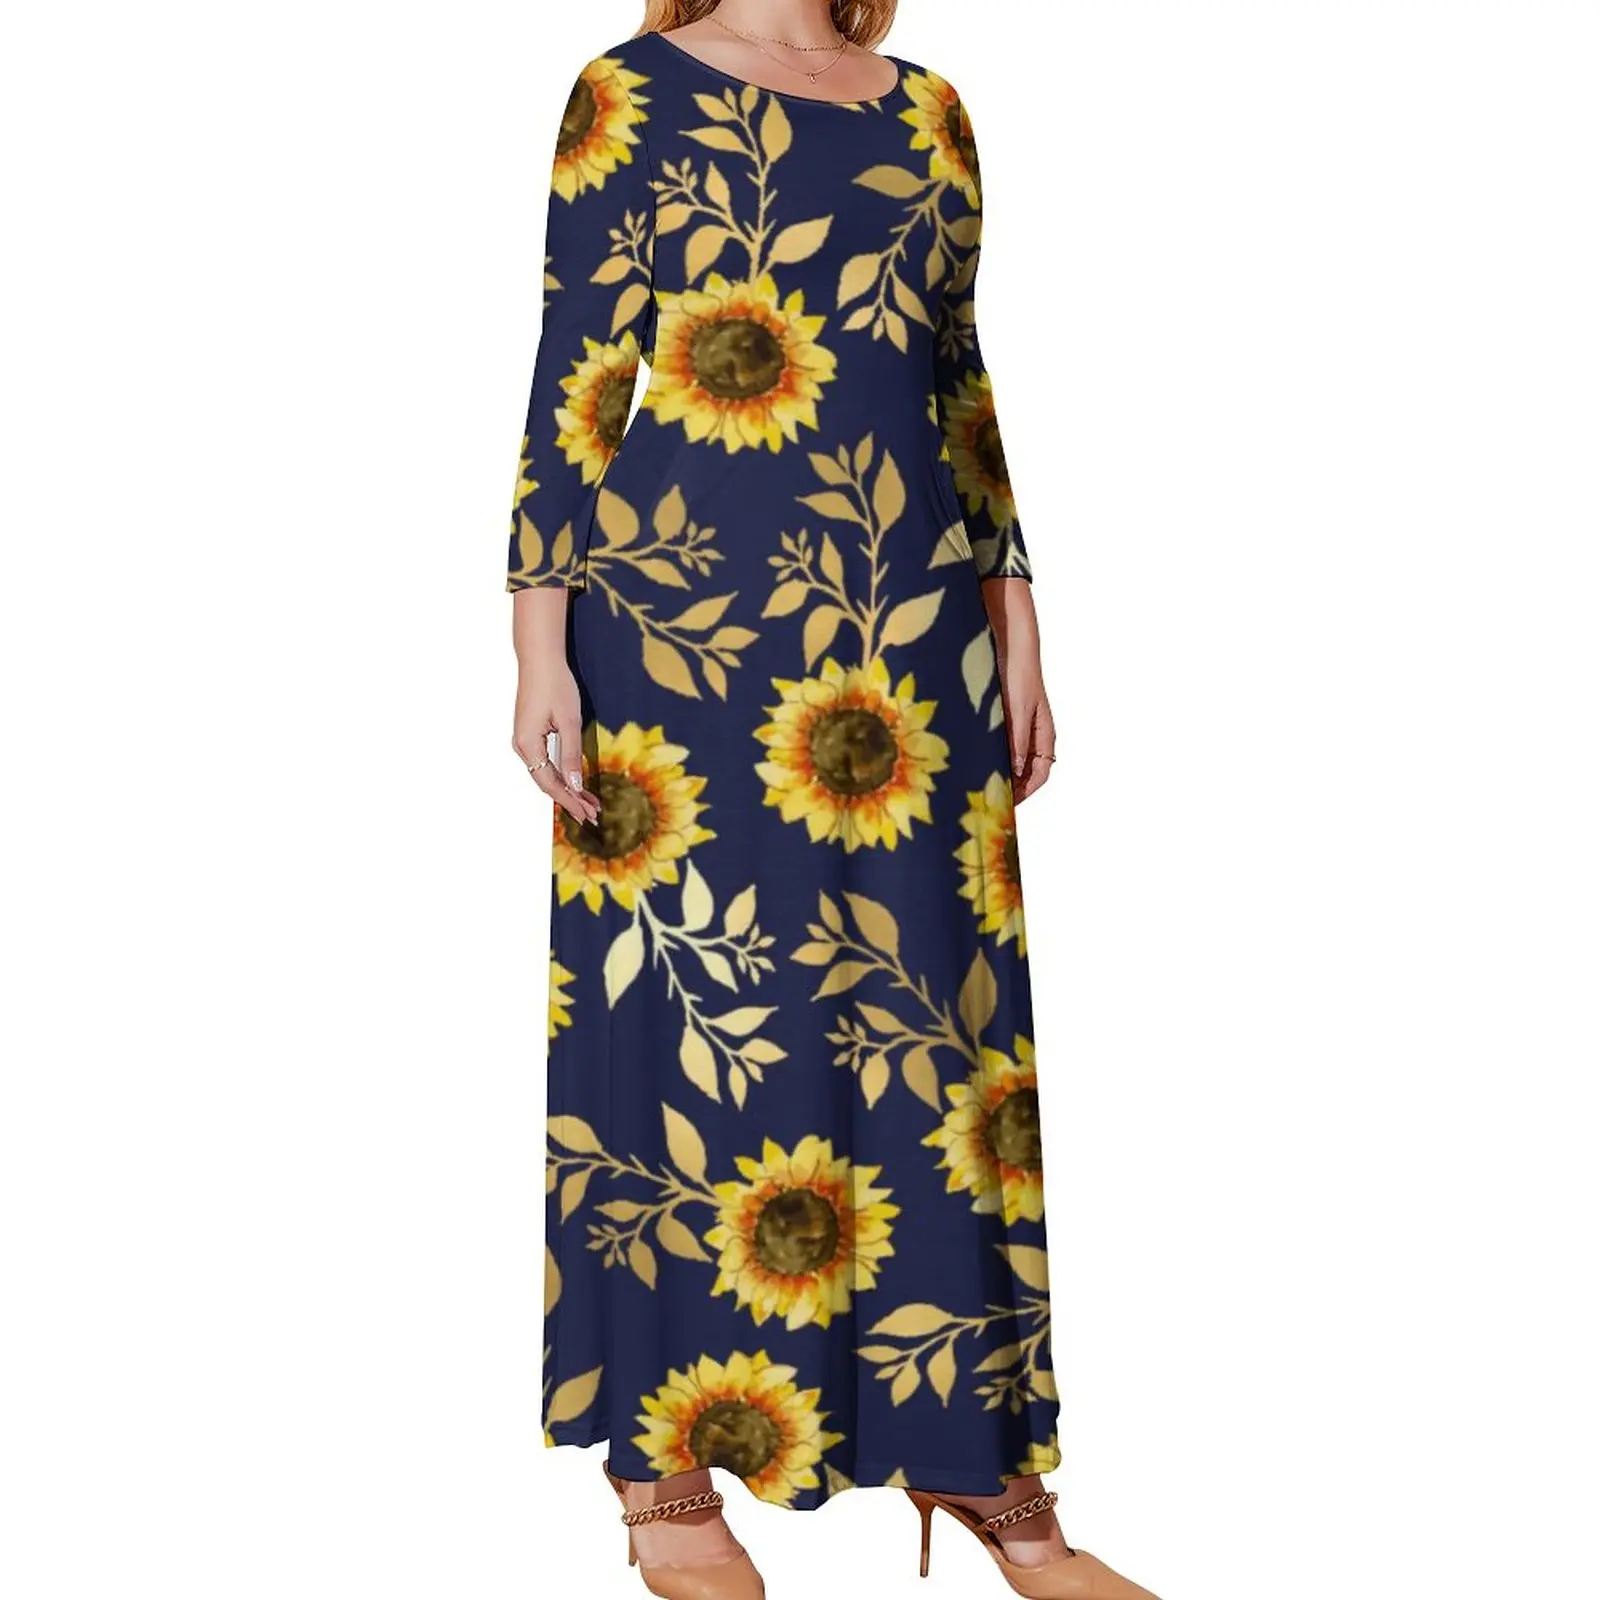 Gold Navy Sunflower Dress Leaves Print Bohemia Dresses Long Sleeve Aesthetic Long Maxi Dress Trendy Clothes Plus Size 4XL 5XL